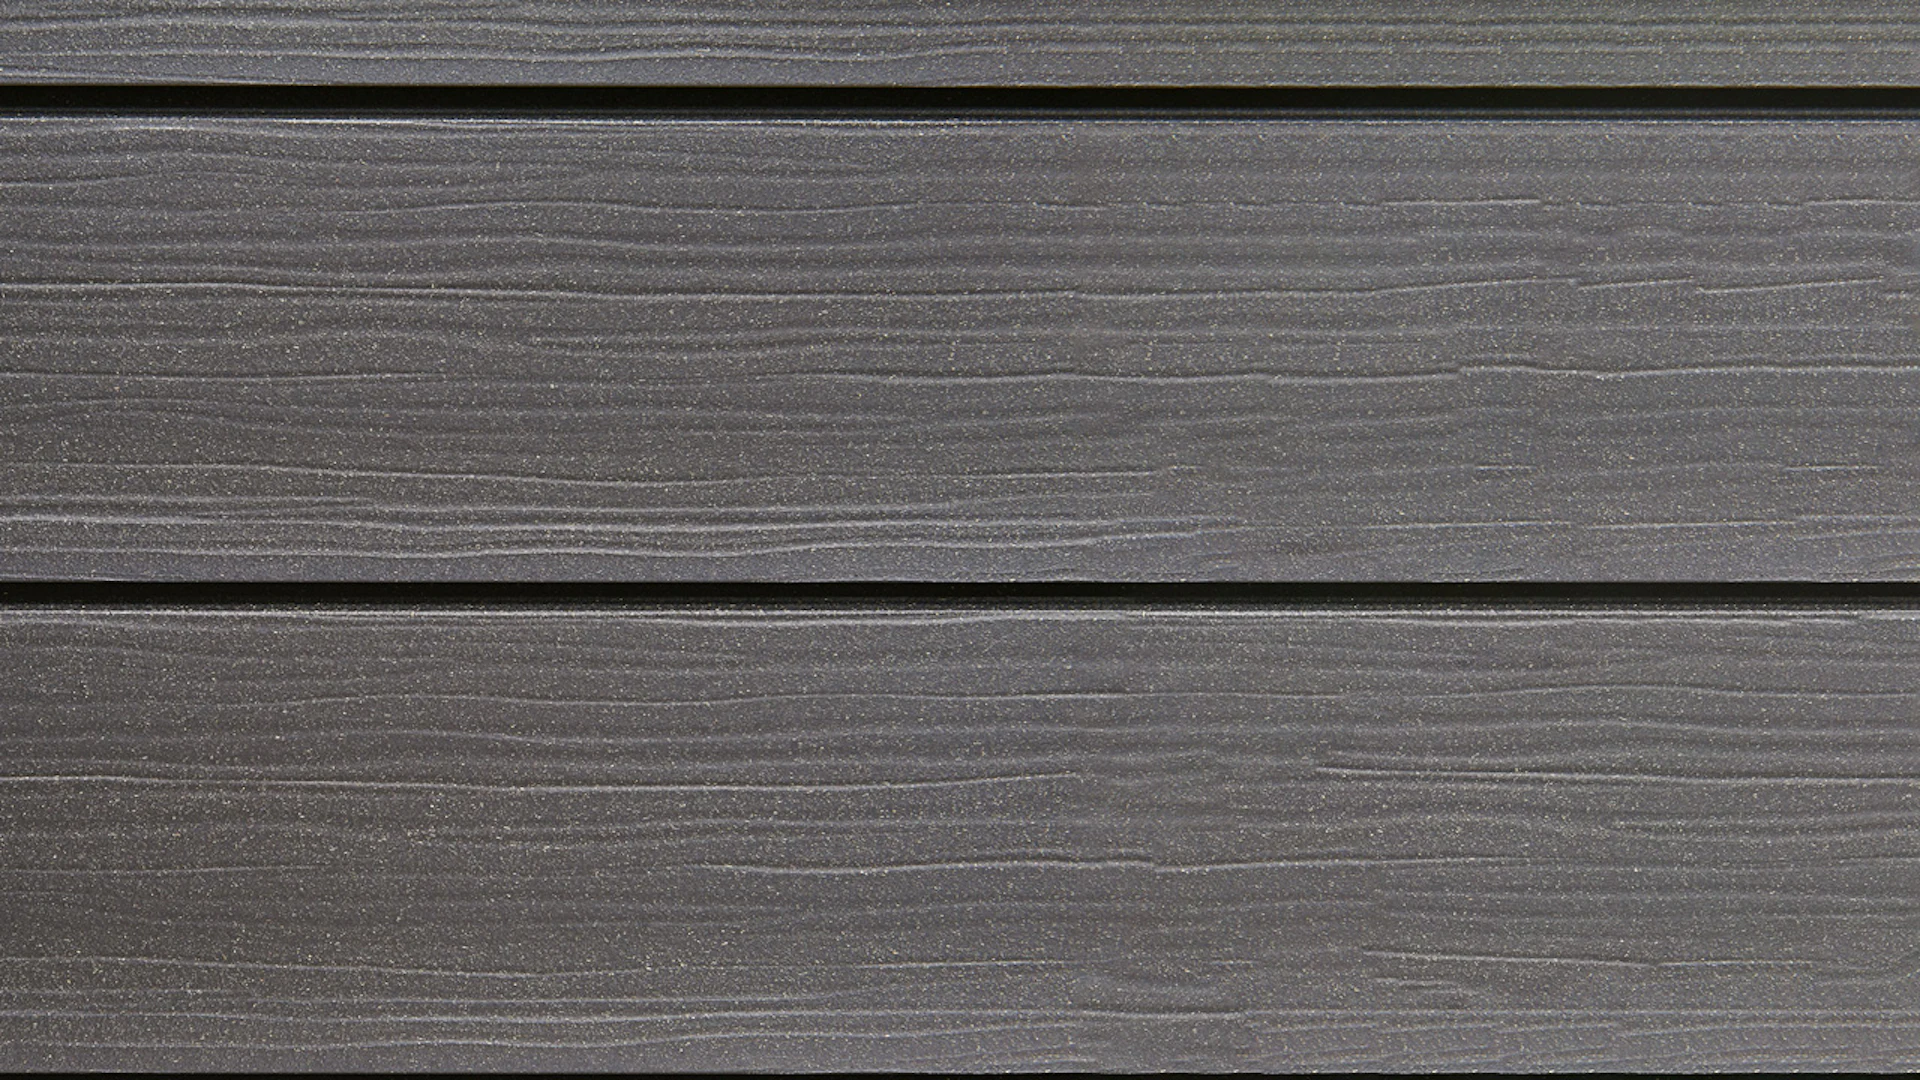 planeo Fassado - bardage composite façade gris lave de première qualité